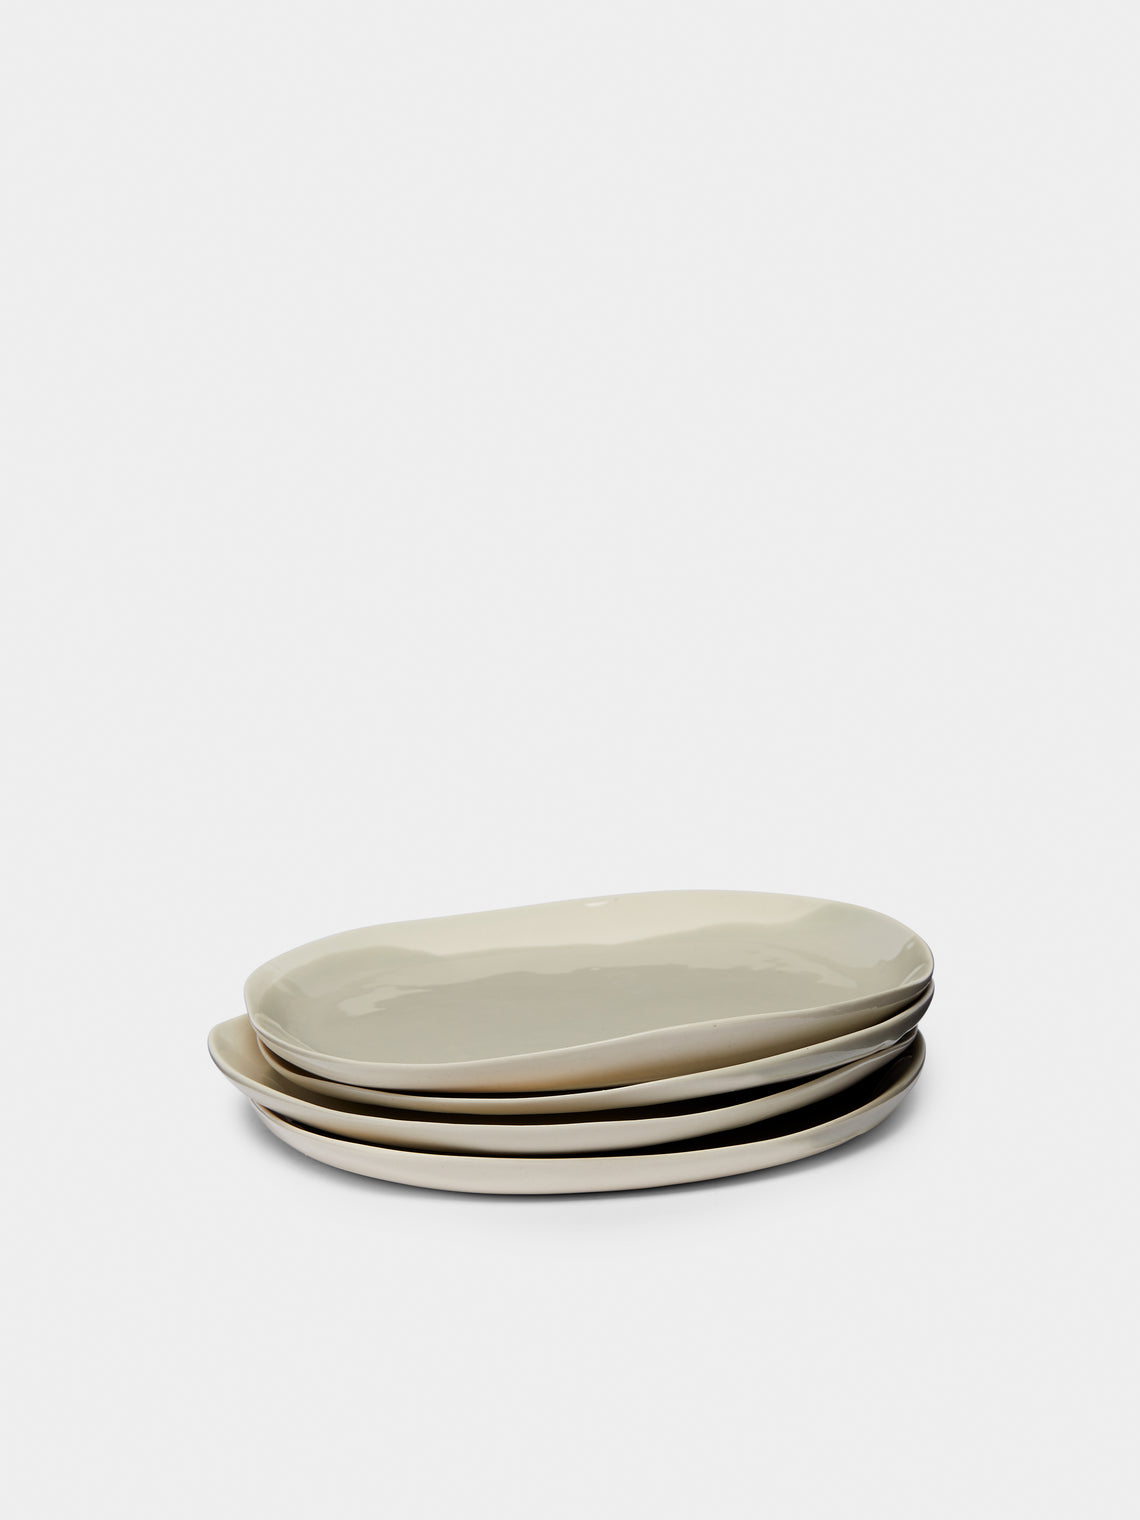 Pottery & Poetry - Hand-Glazed Porcelain Side Plates (Set of 4) - Grey - ABASK